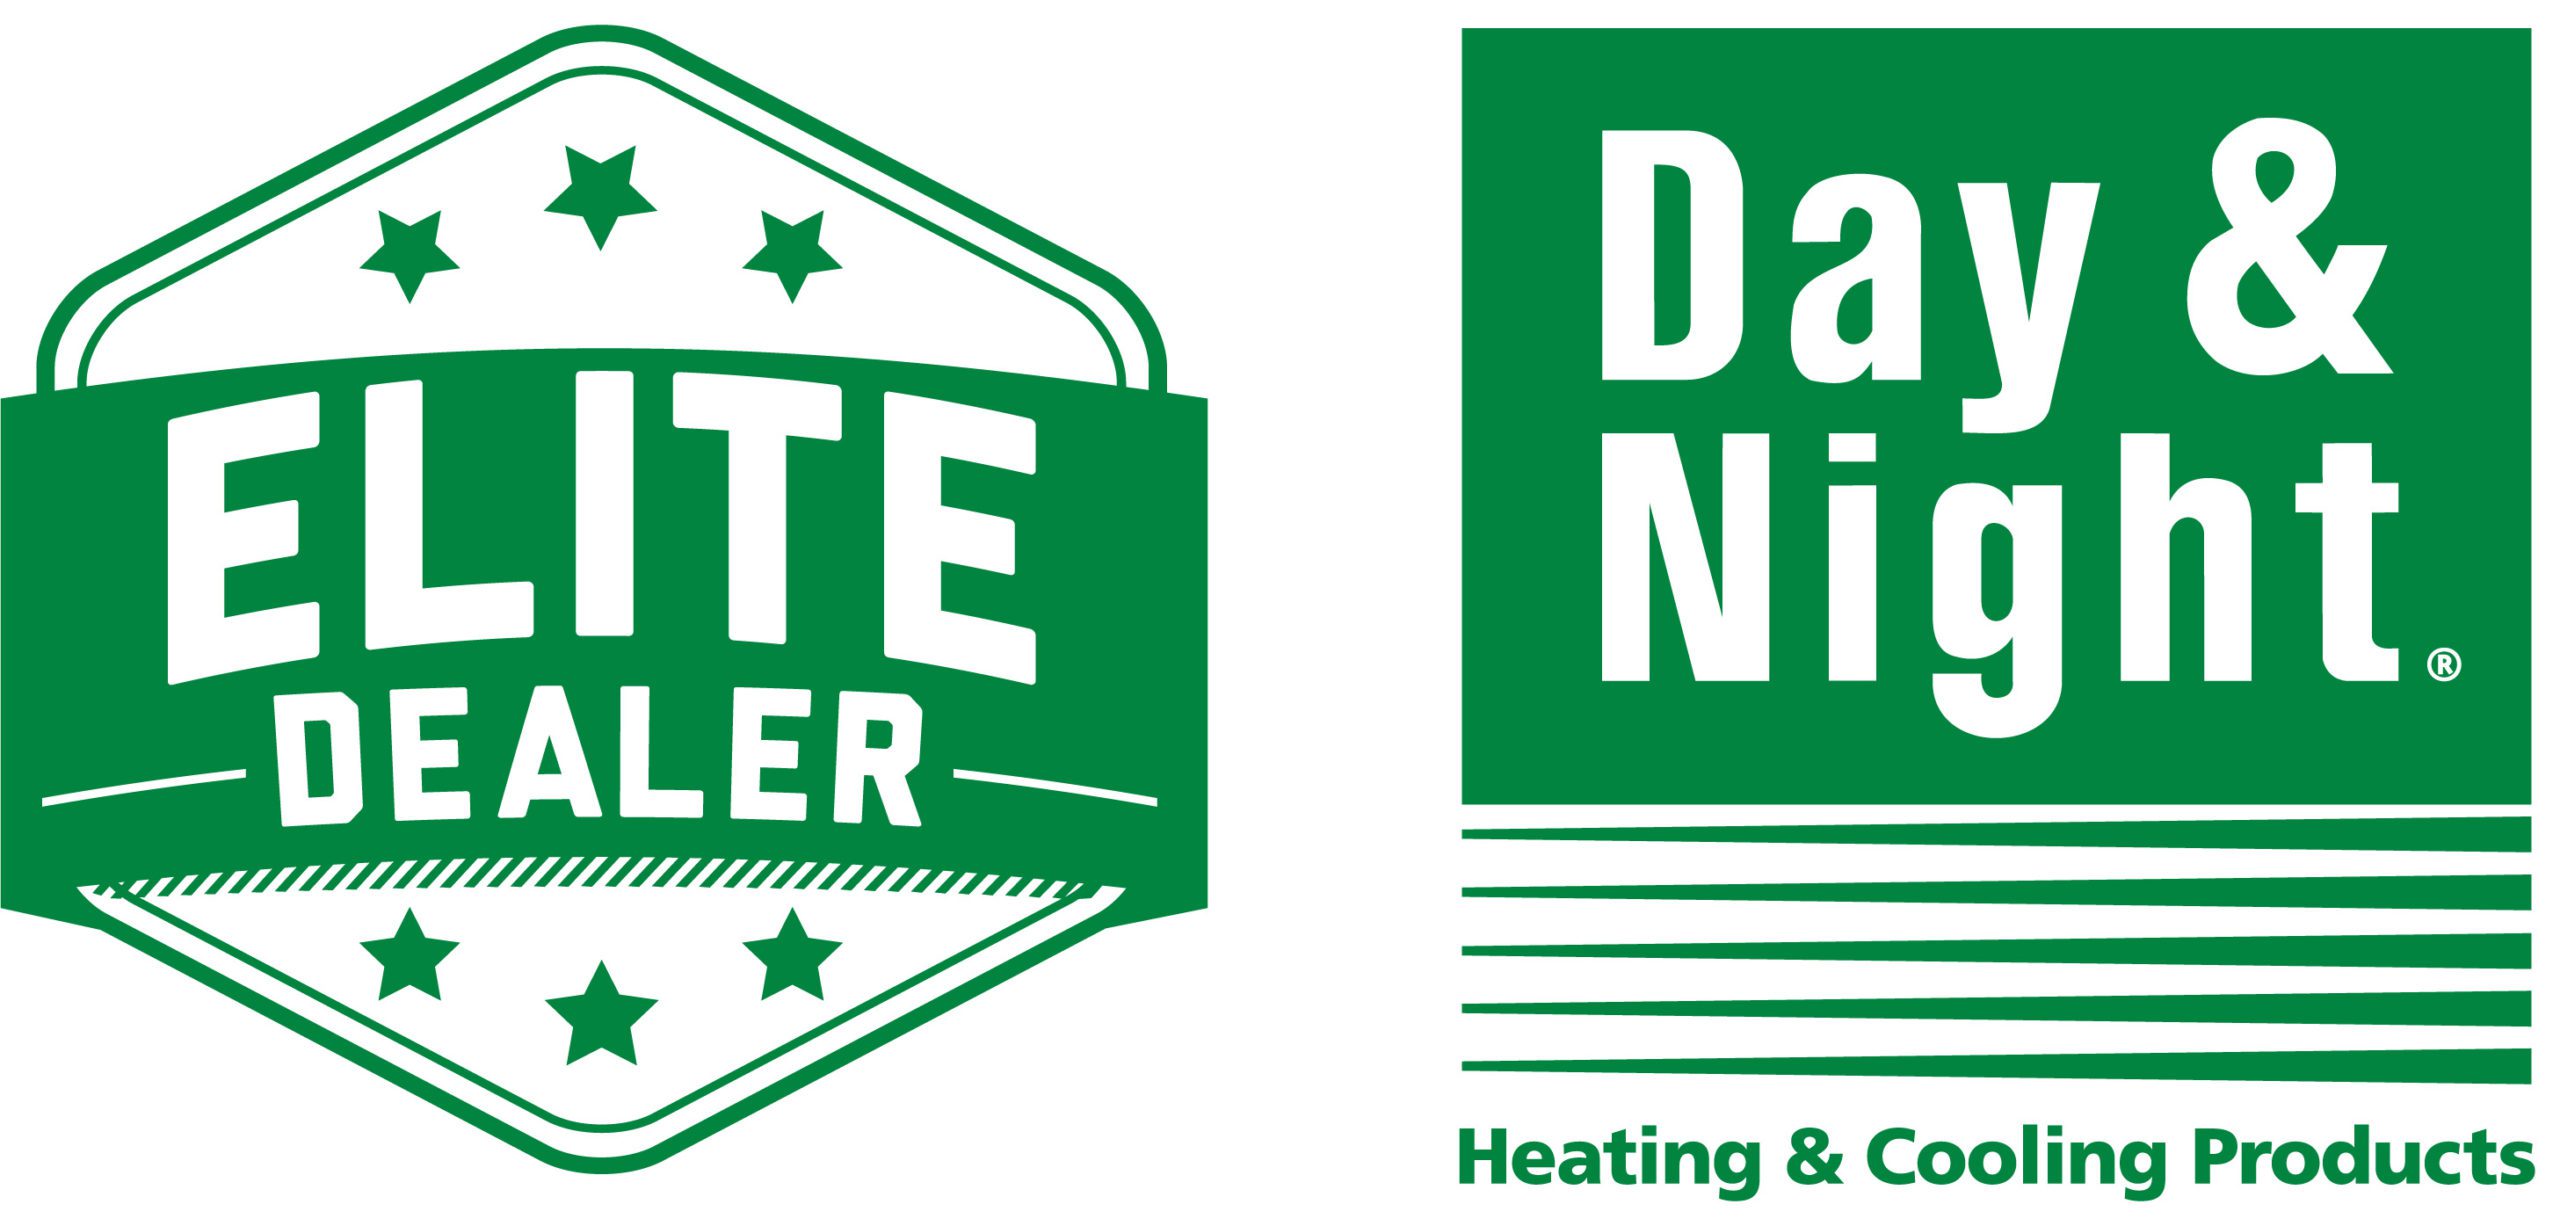 Day & Night logo and Elite Dealer logo | Pro Comfort Heating & Cooling